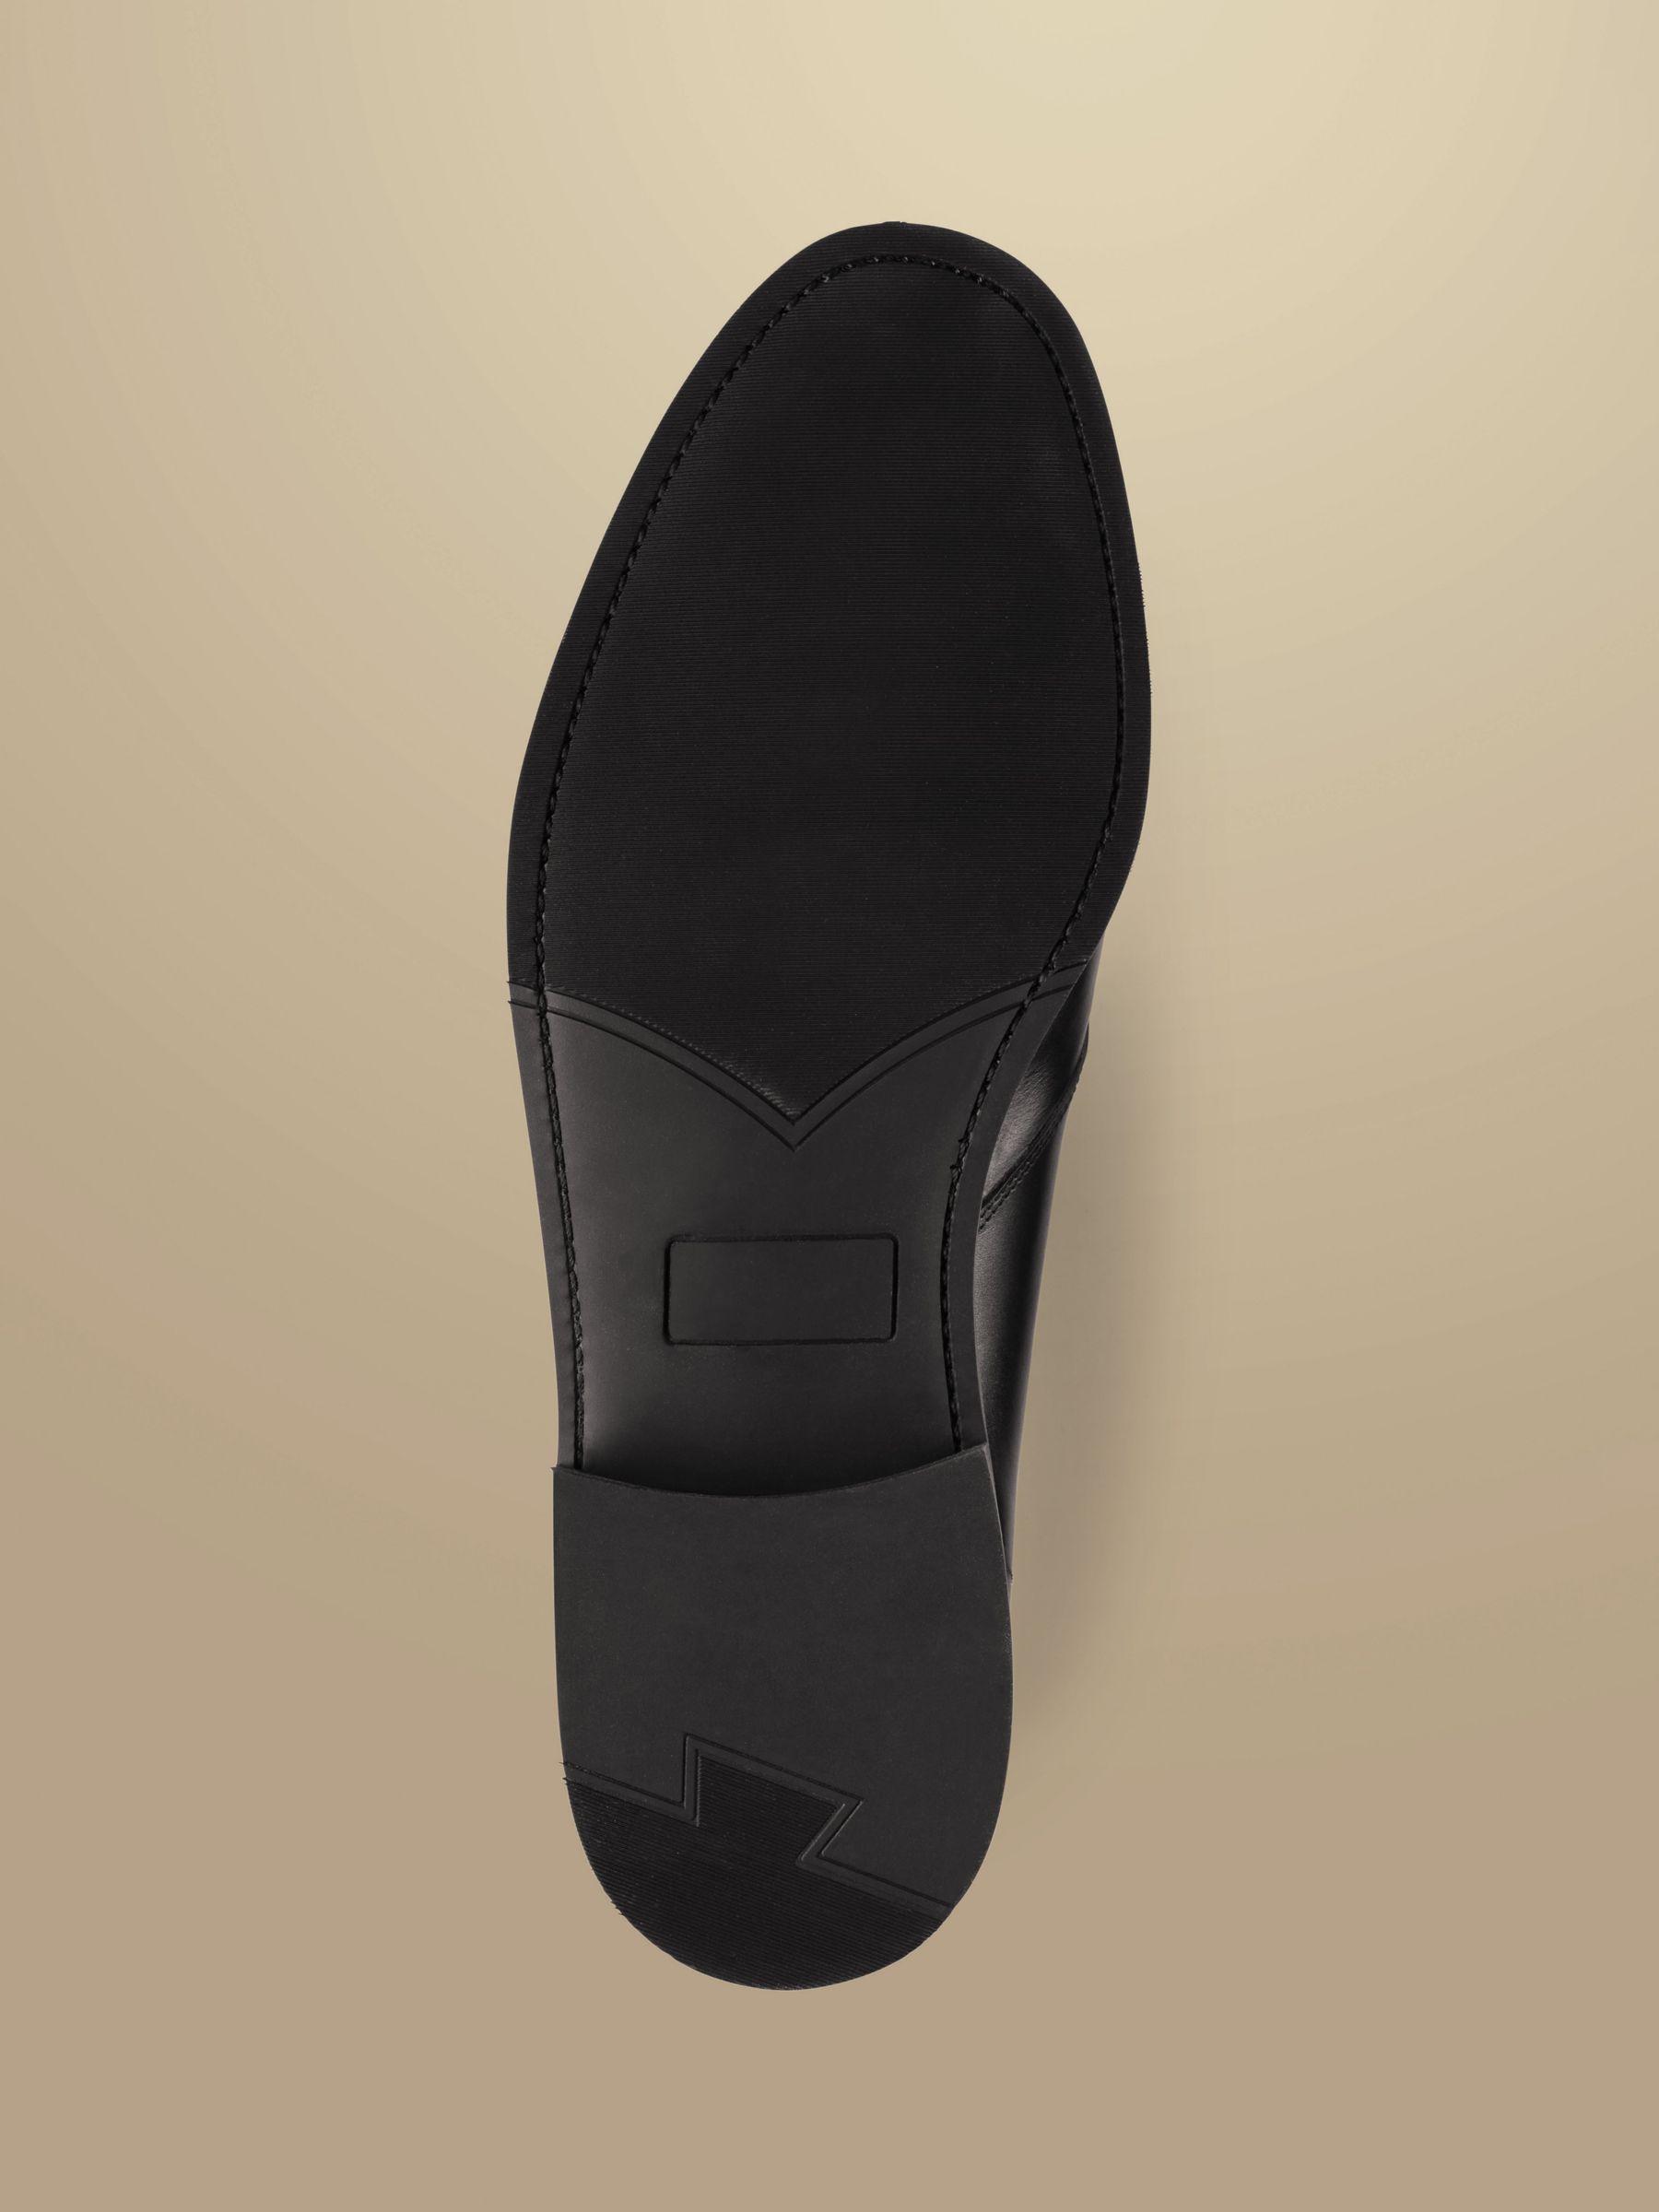 Charles Tyrwhitt Leather Derby Shoes, Black, 11